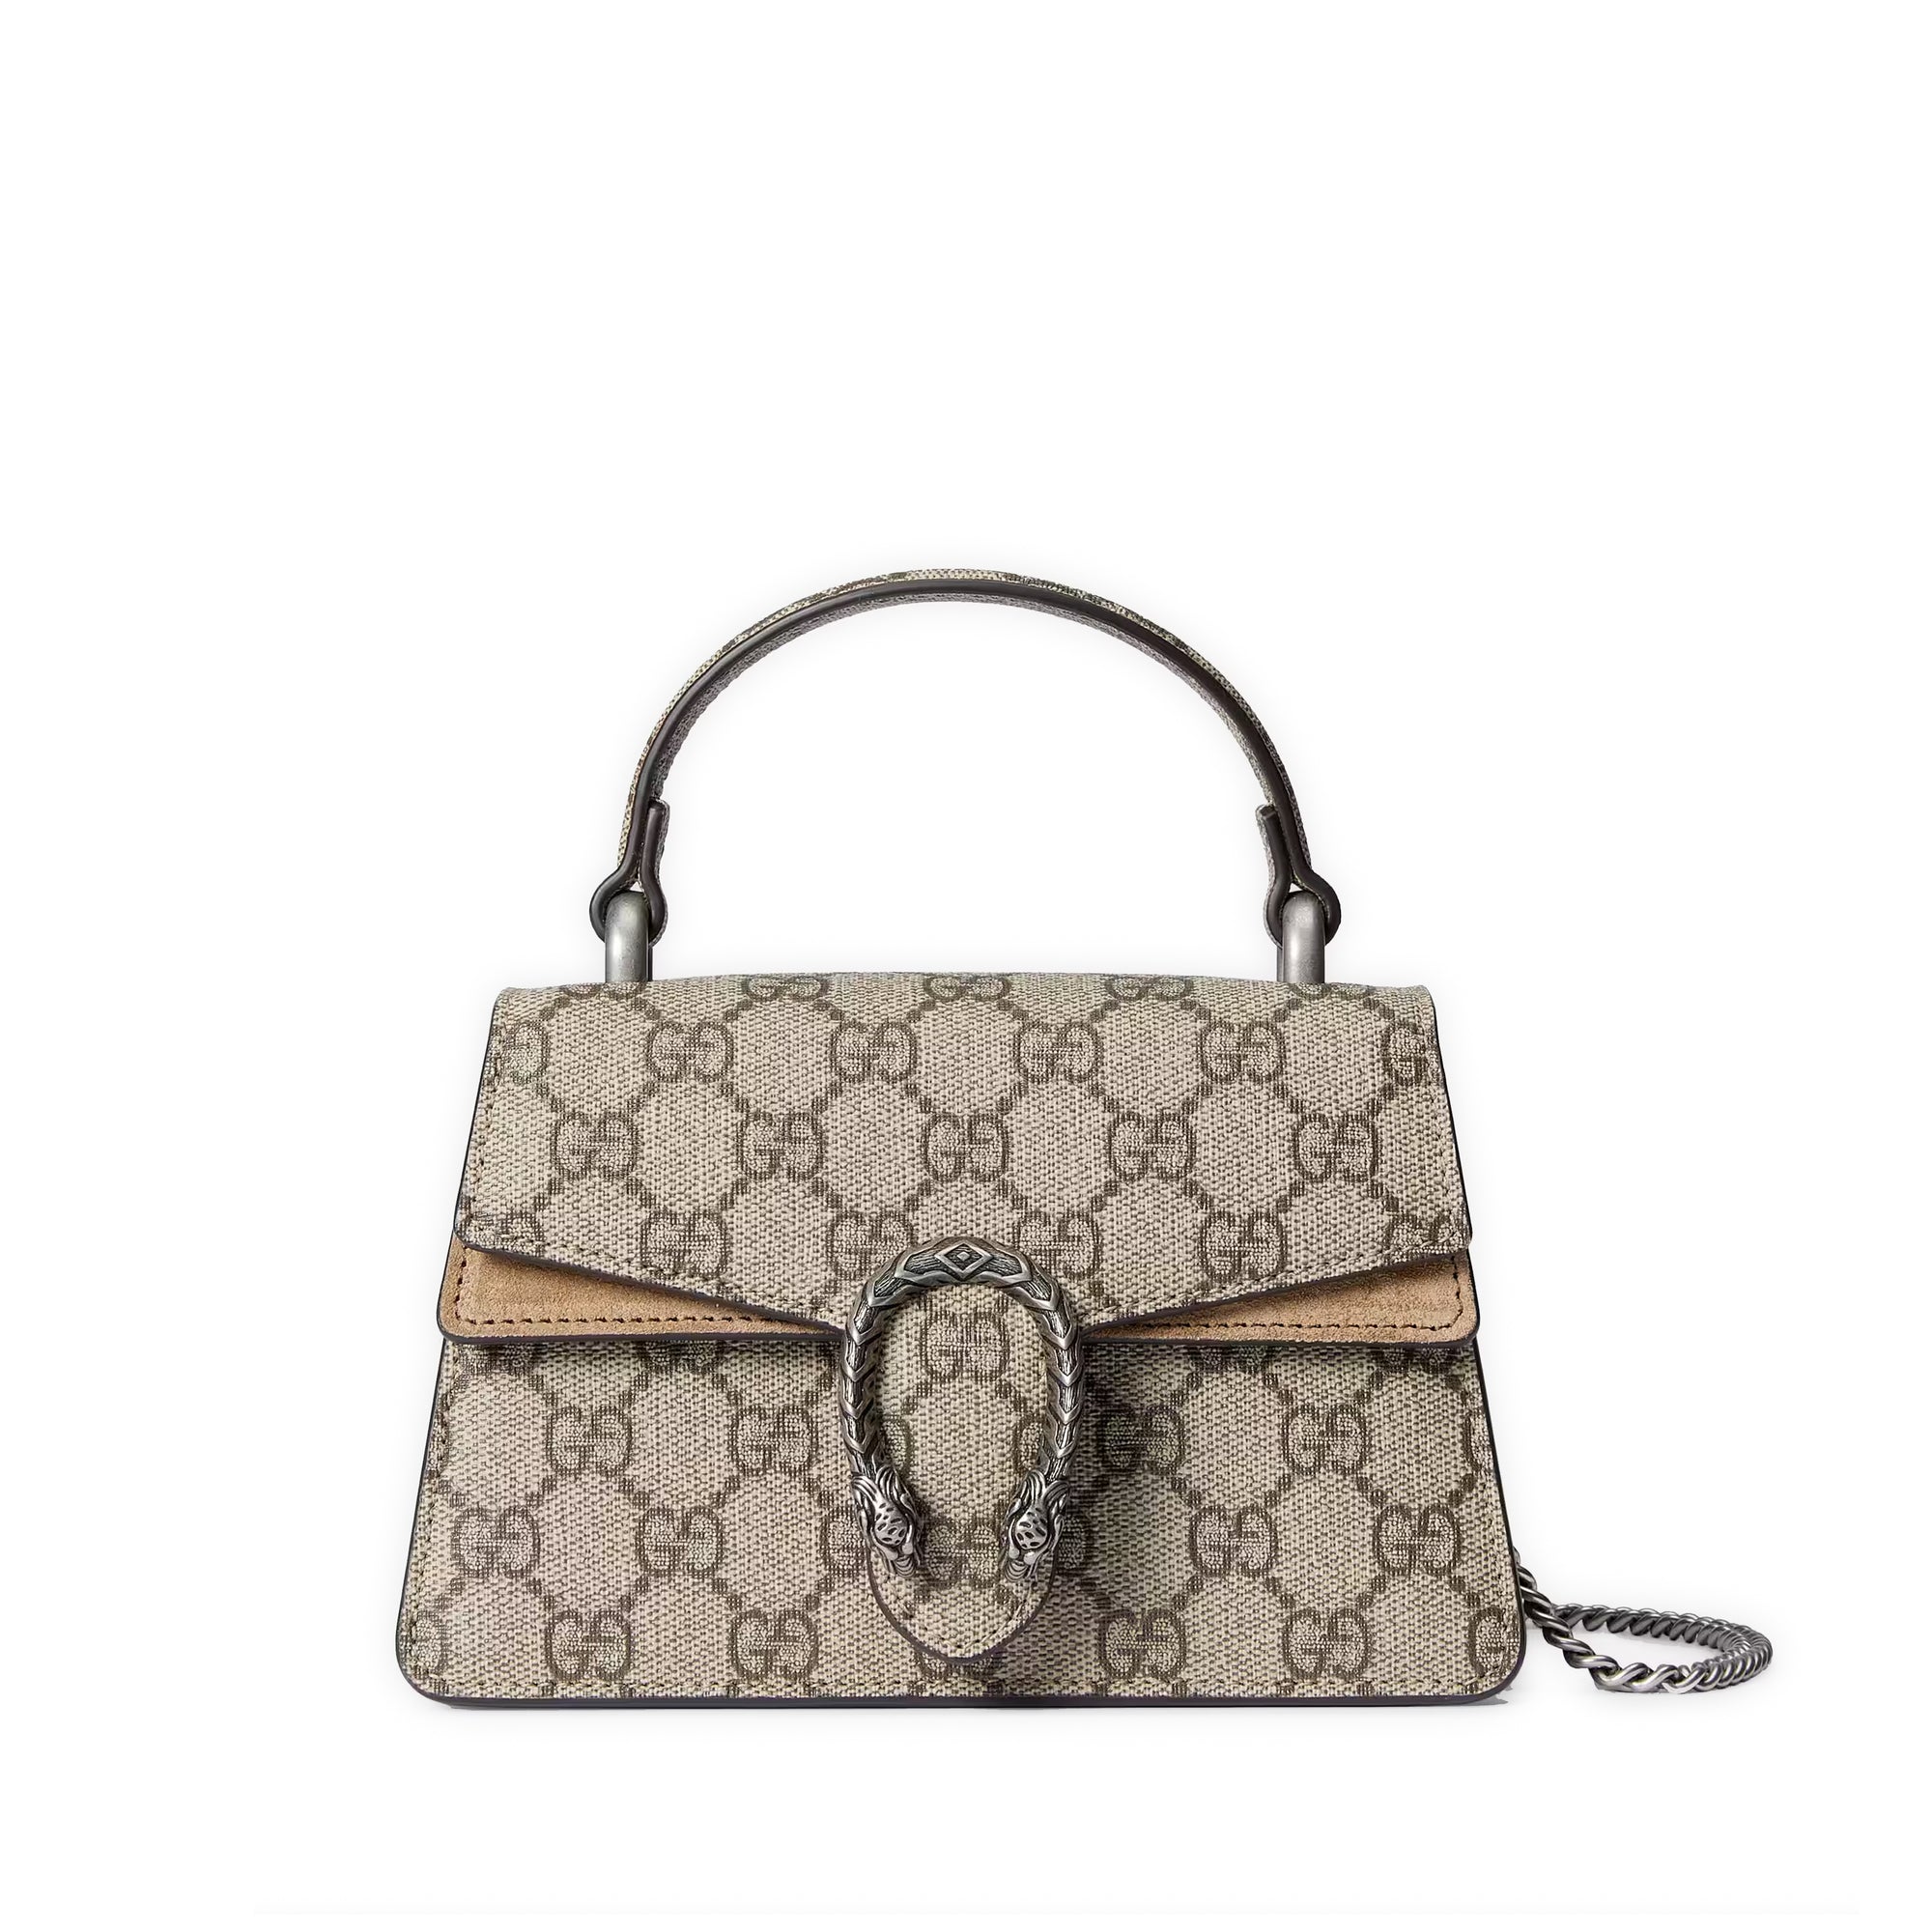 Gucci - Women’s Dionysus Mini Top Handle Bag - (Beige) view 1